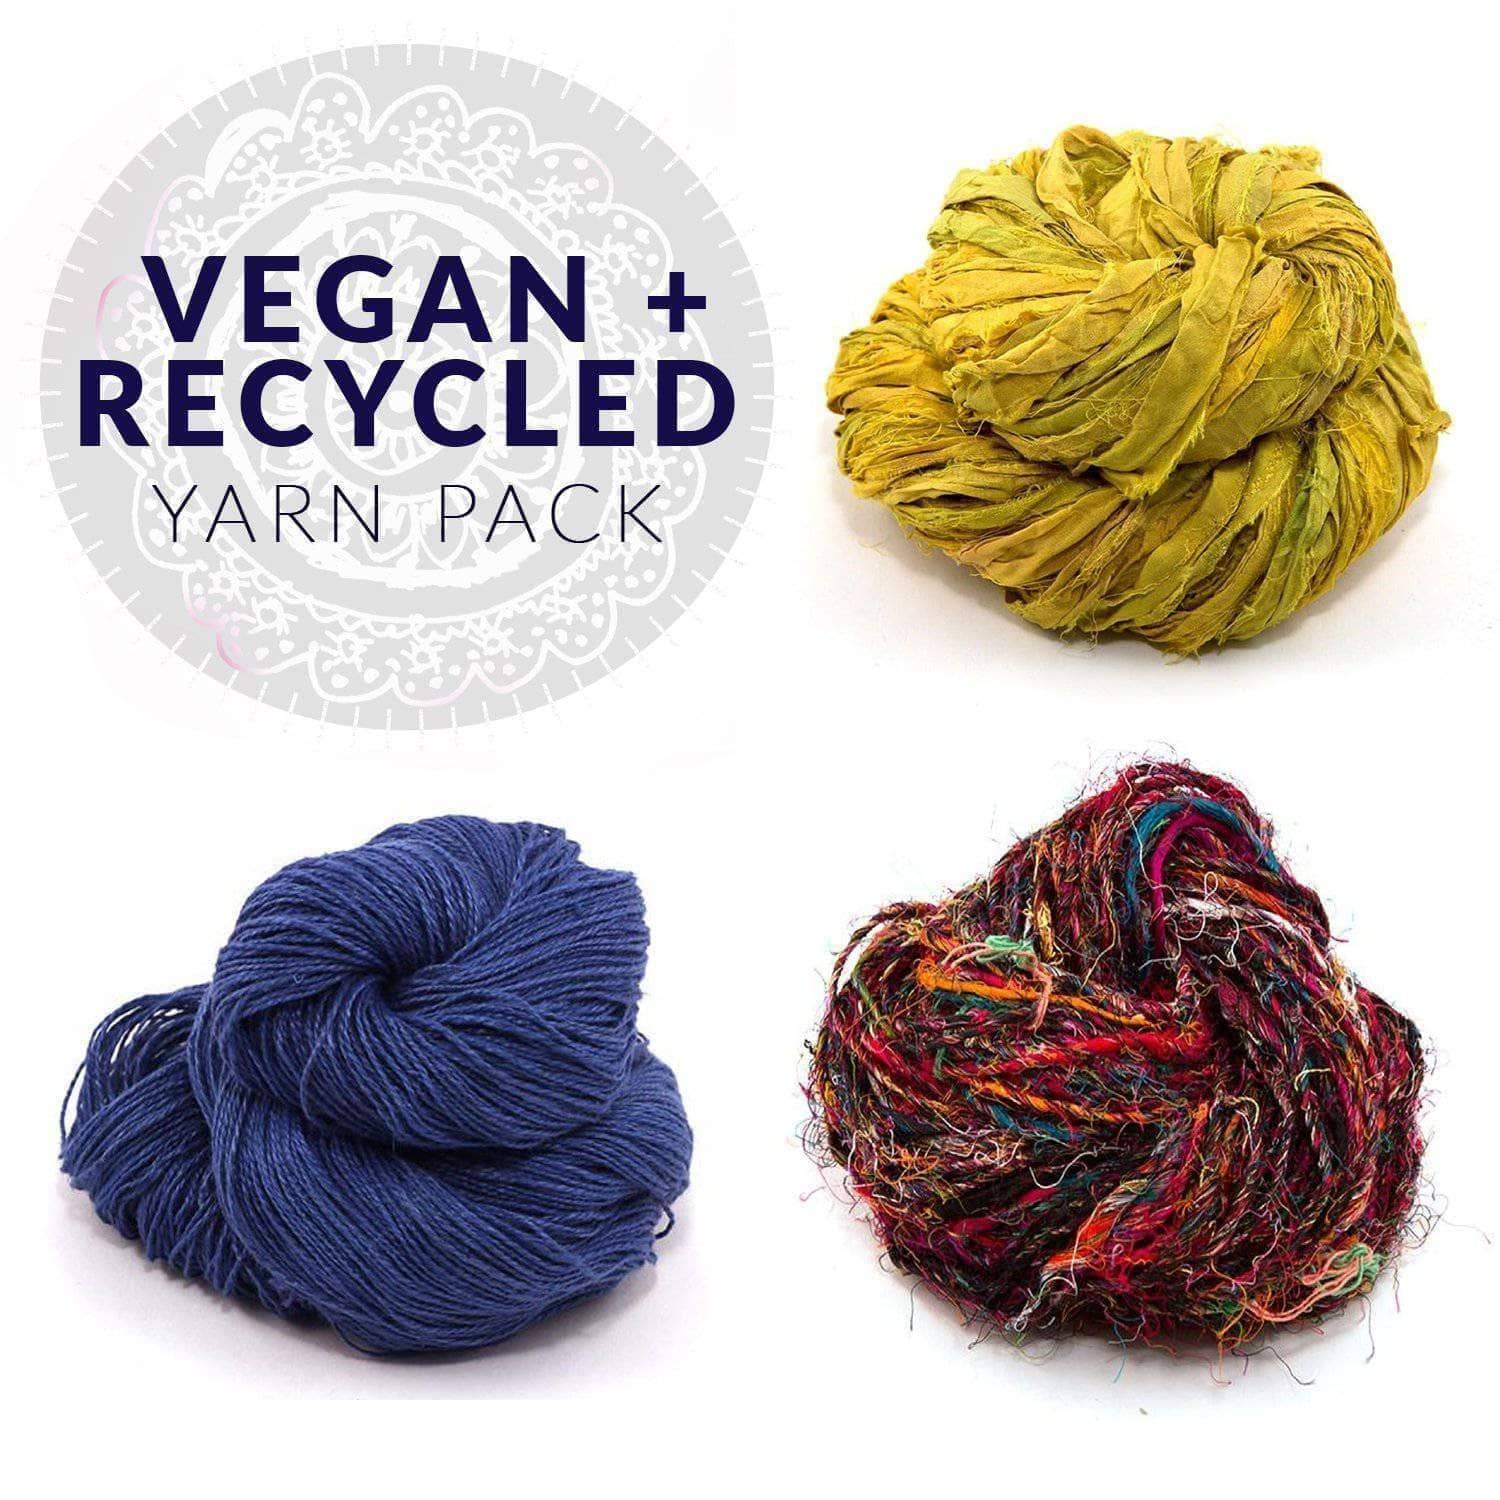 Top 5 Reasons to Use Vegan and Recycled Yarn - Darn Good Yarn